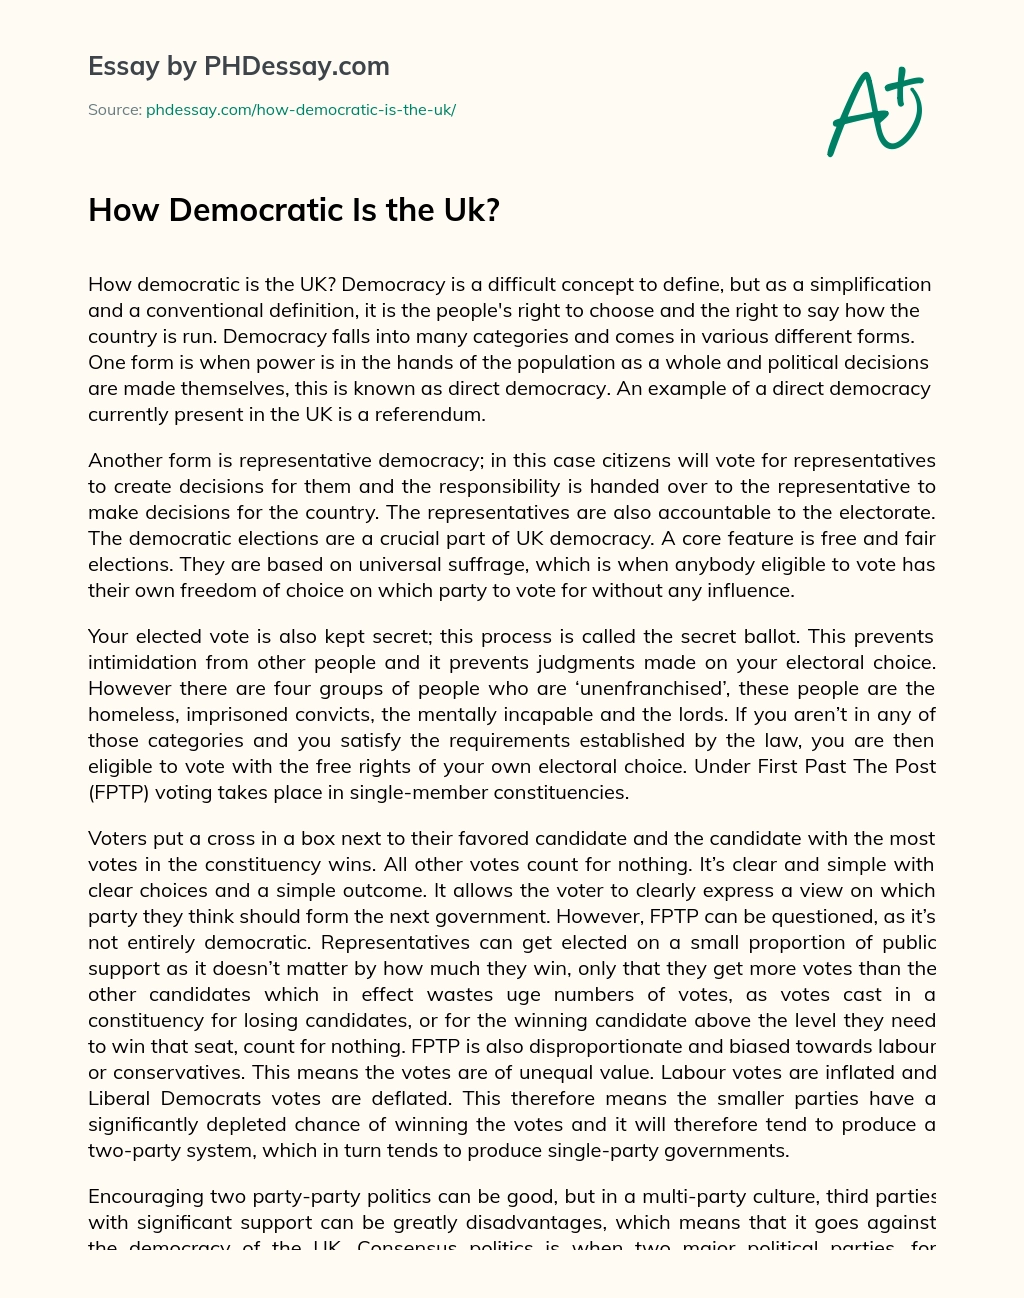 how democratic is the uk essay